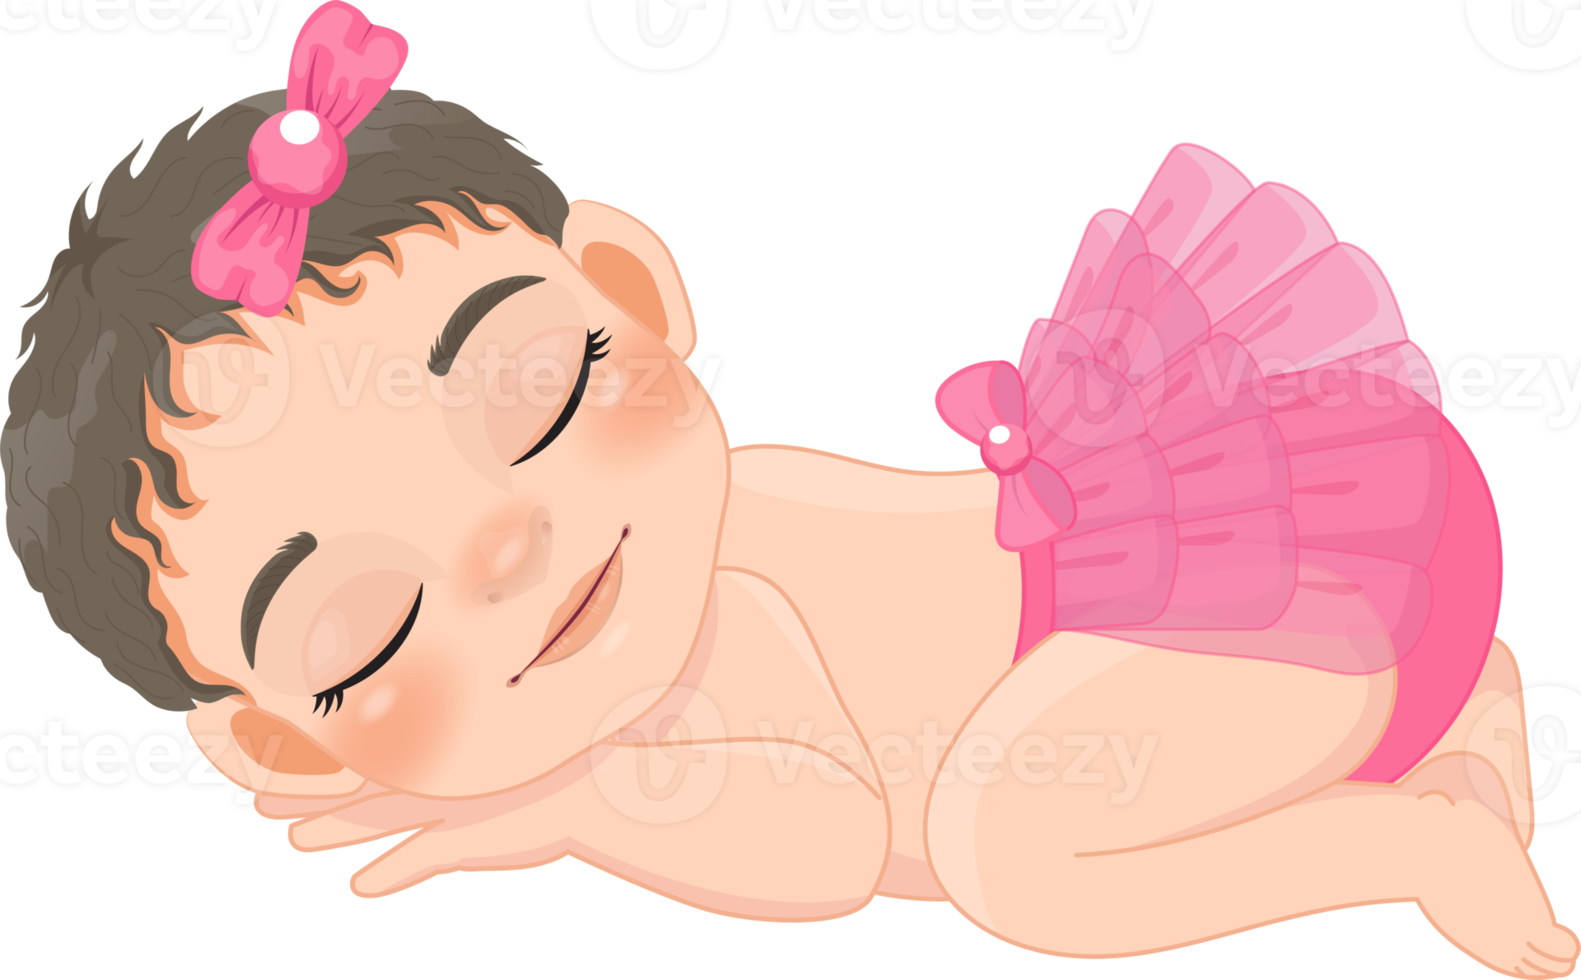 Baby Girl Sleeping Cartoon Character png